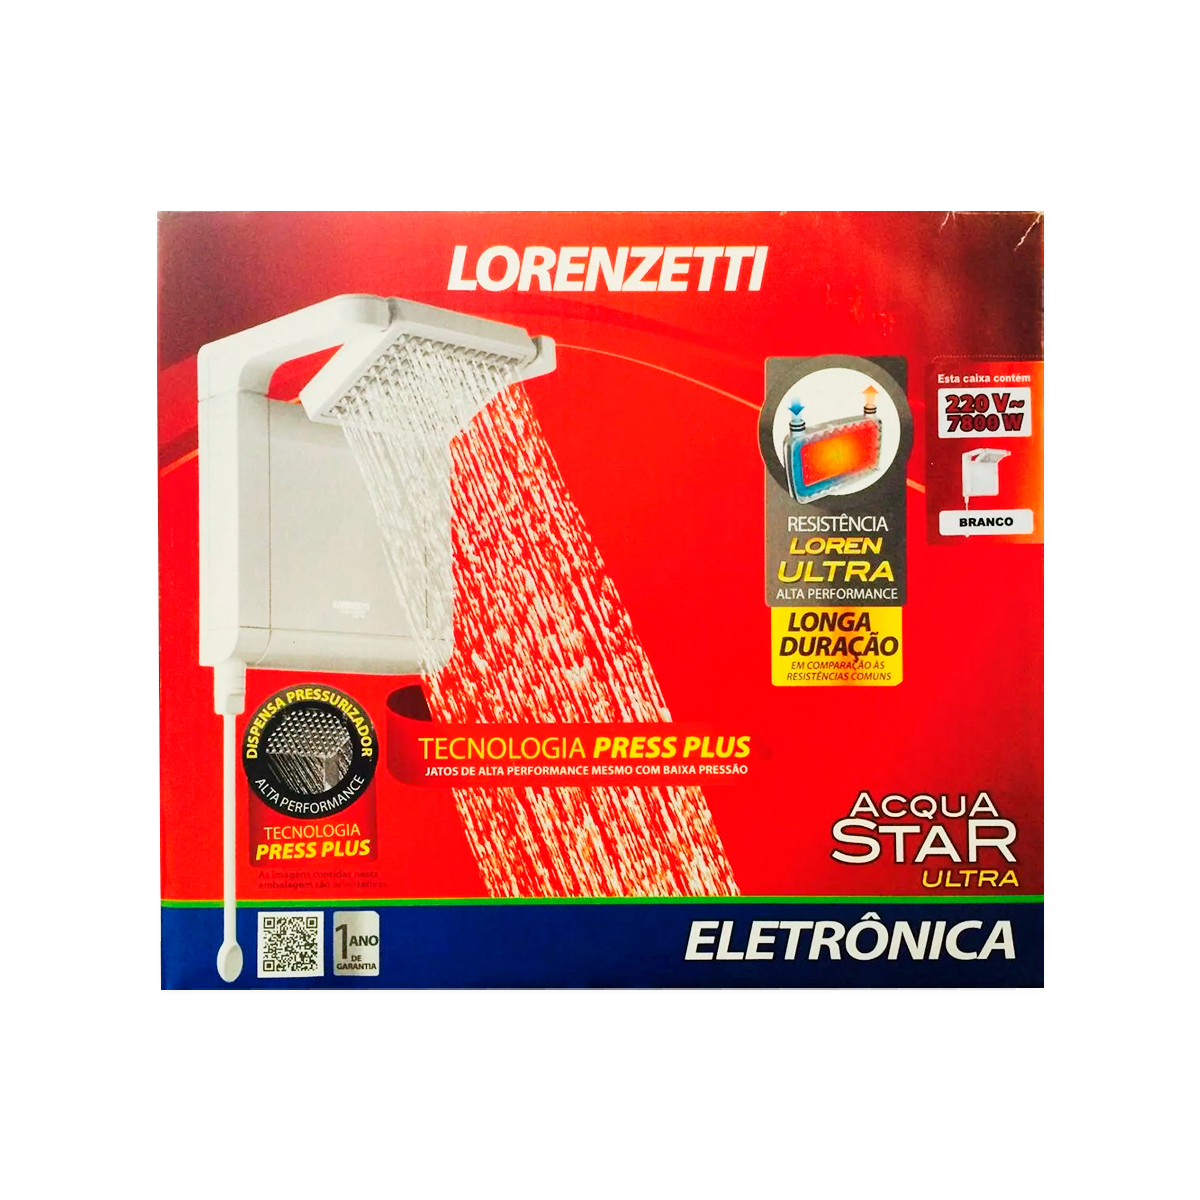 Chuveiro Eletrônico Lorenzetti Acqua Star 220V 7800W  Branco - 5